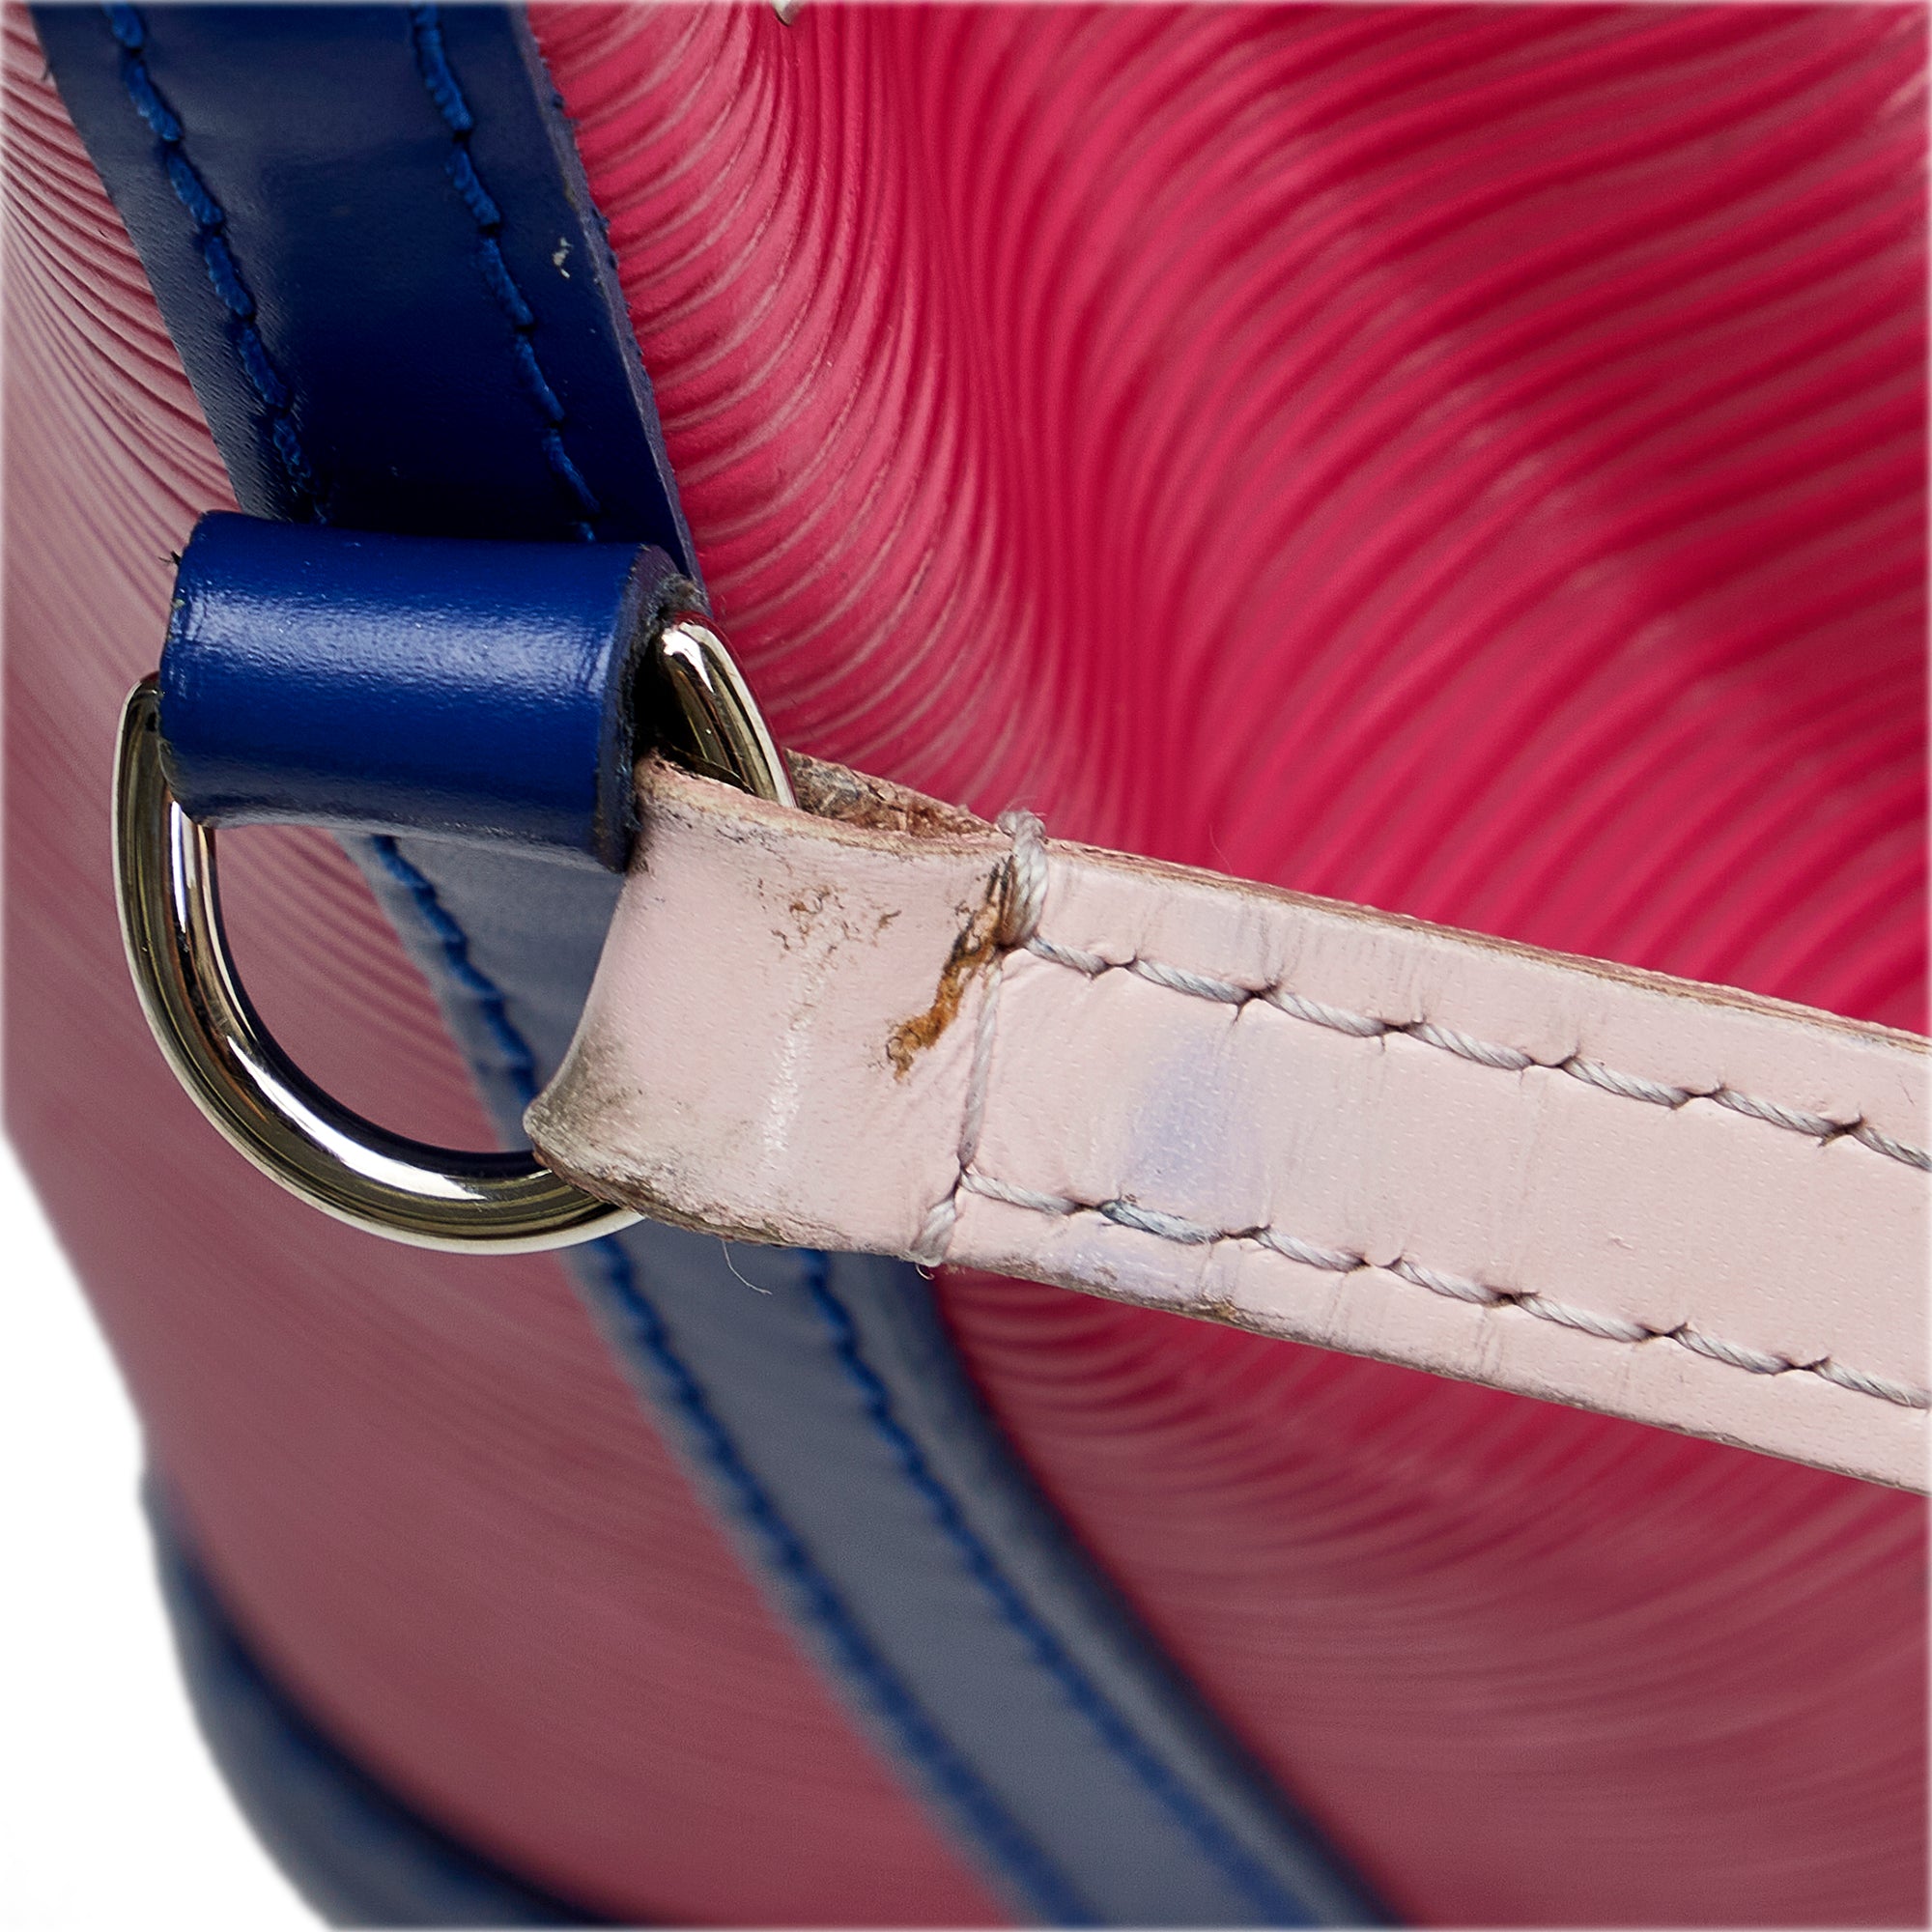 Louis-Vuitton-Adjustable-Shoulder-Strap-for-Epi-Bags-120cm